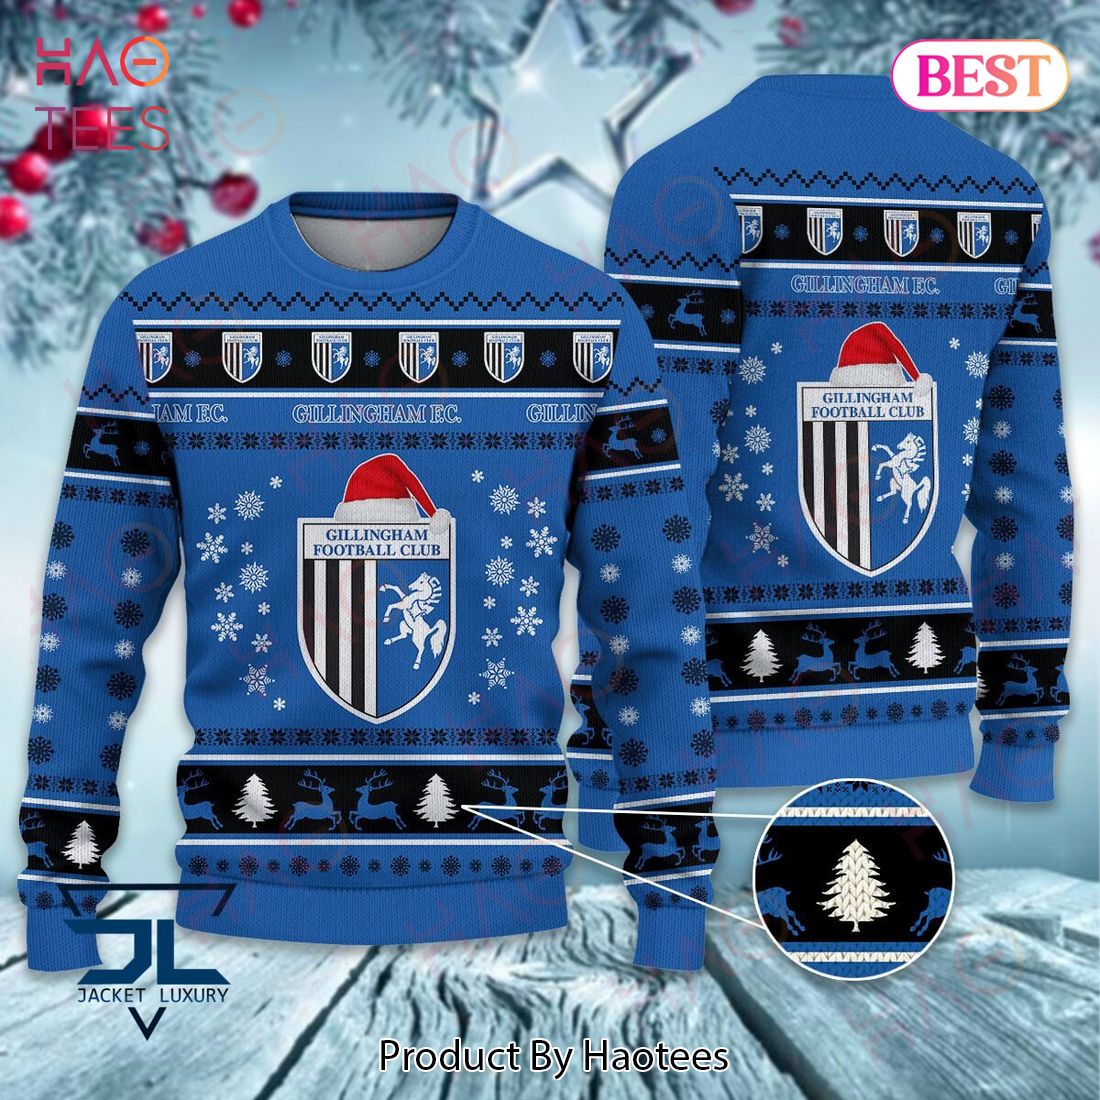 Gillingham Football Club Luxury Brand Sweater Limited Edition